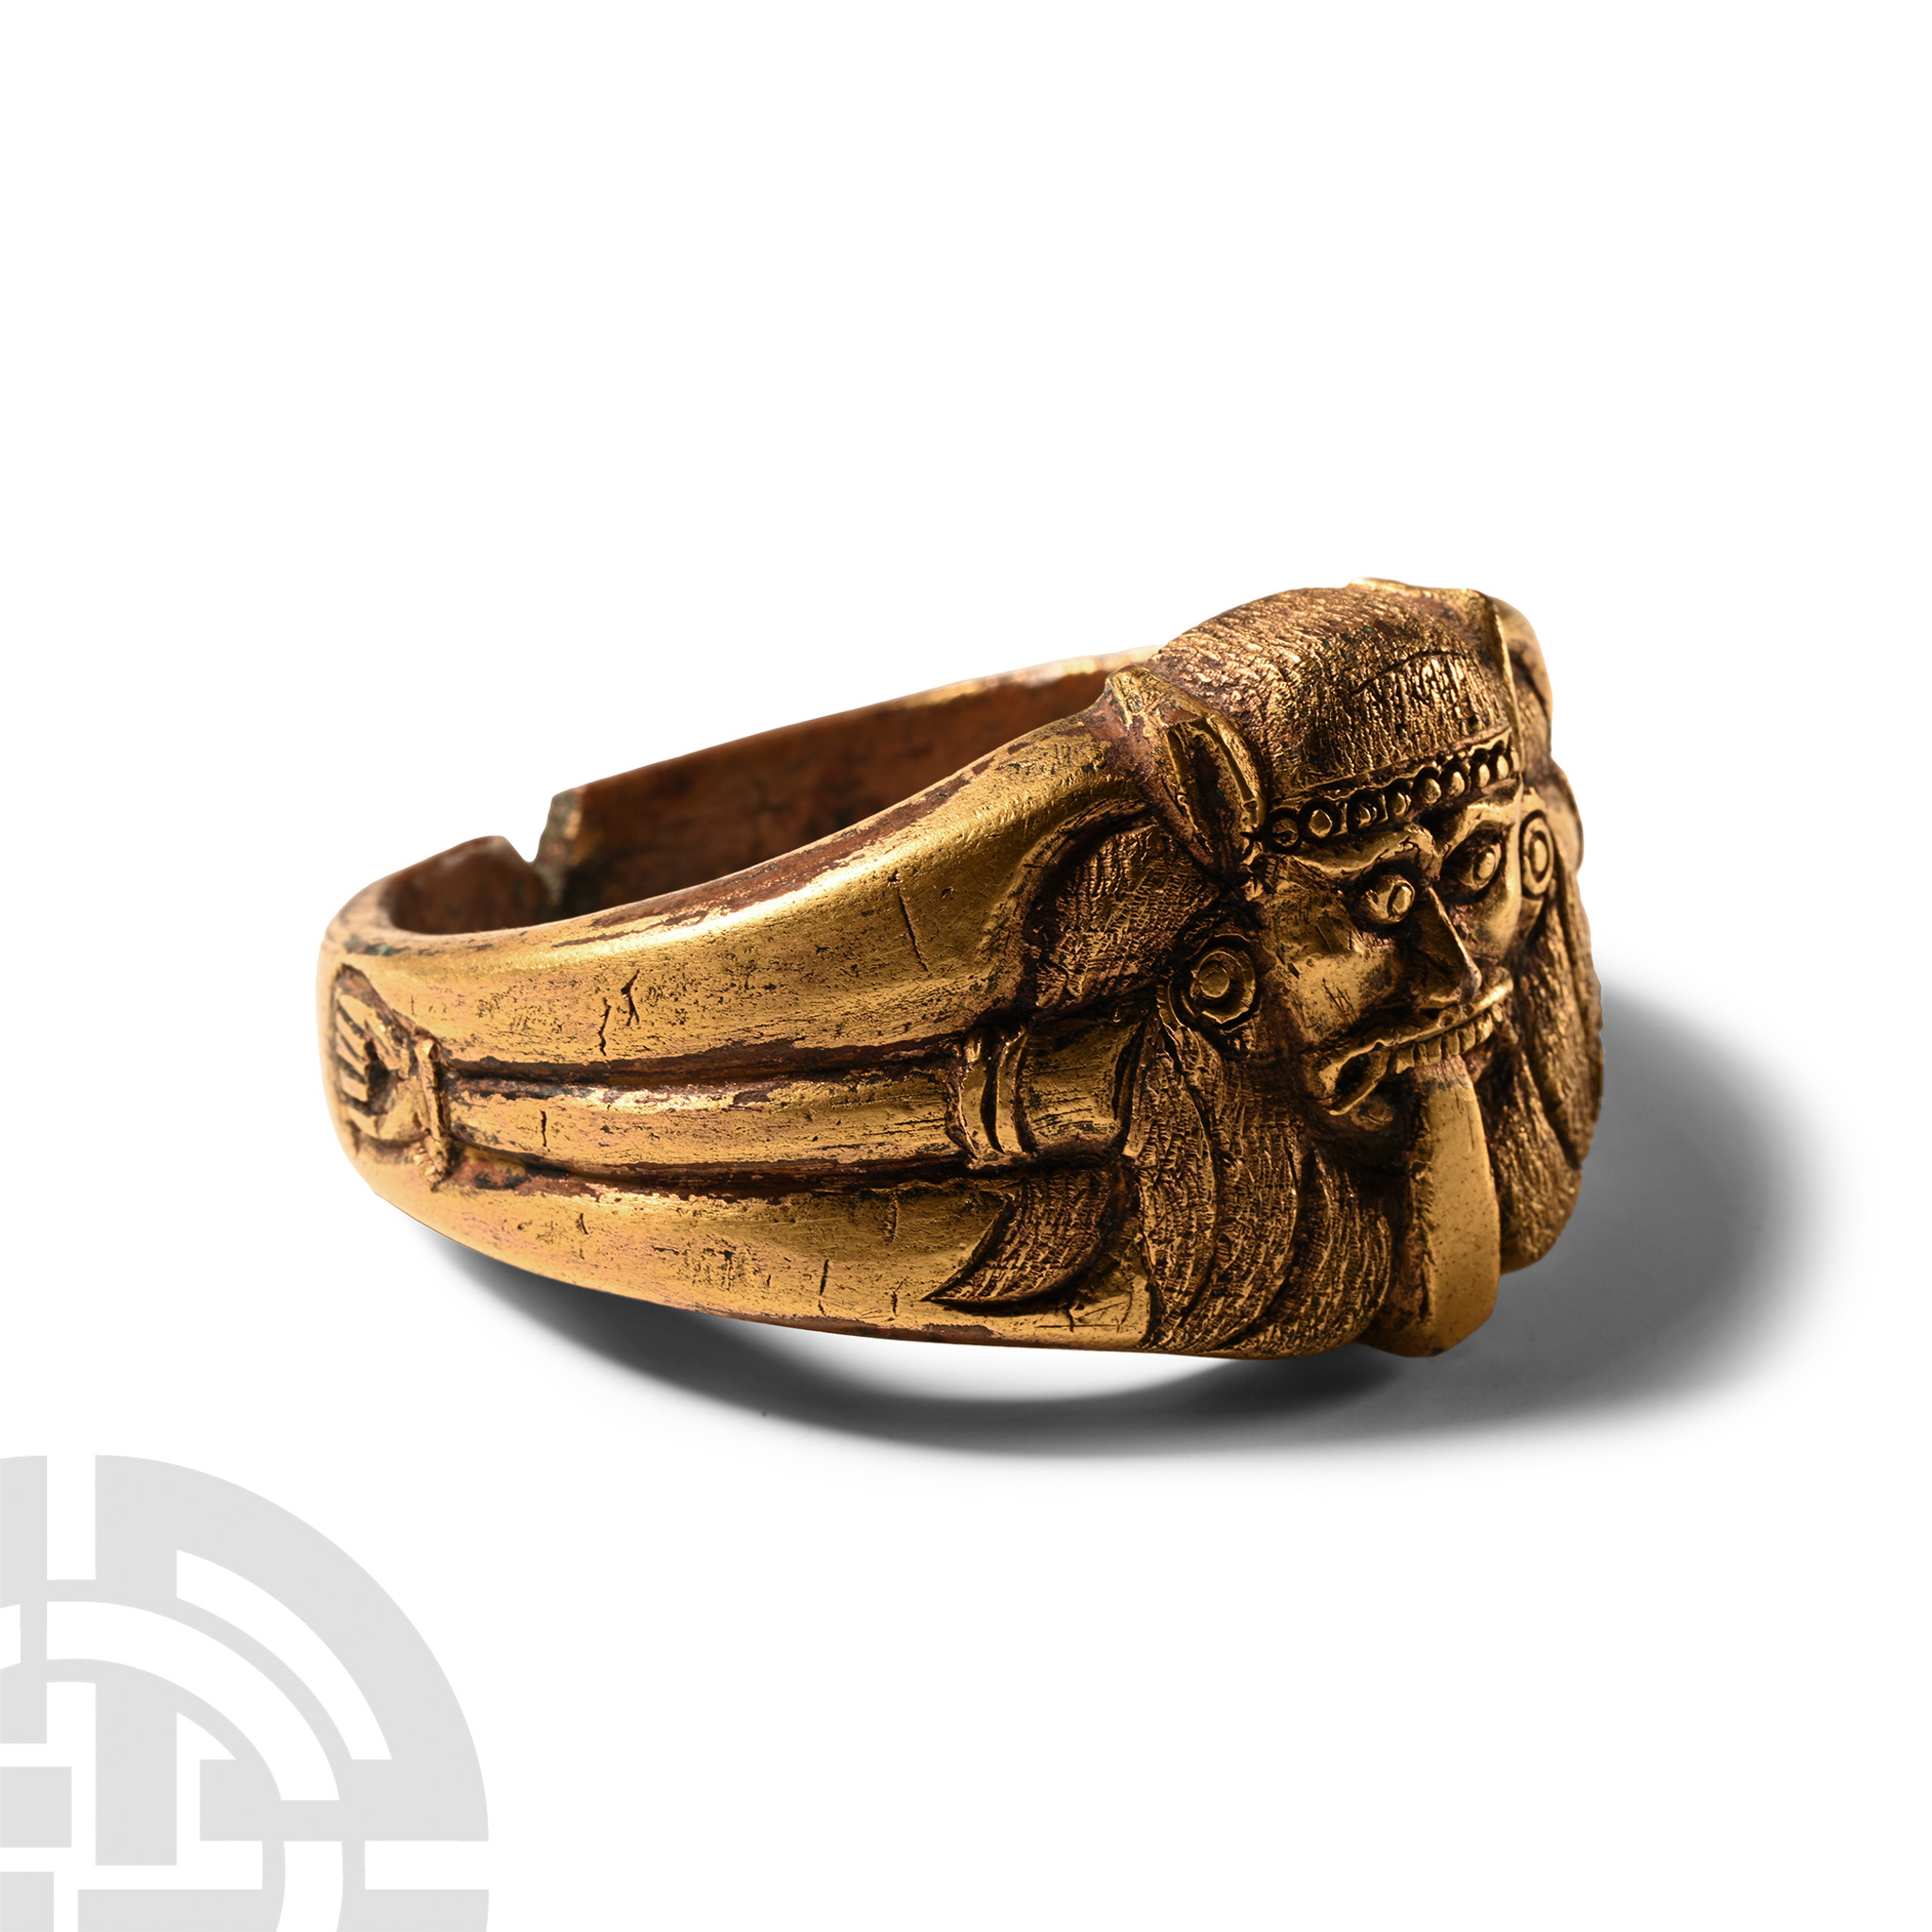 Tibetan Gilt Bronze Bracelet with Demon - Image 2 of 2